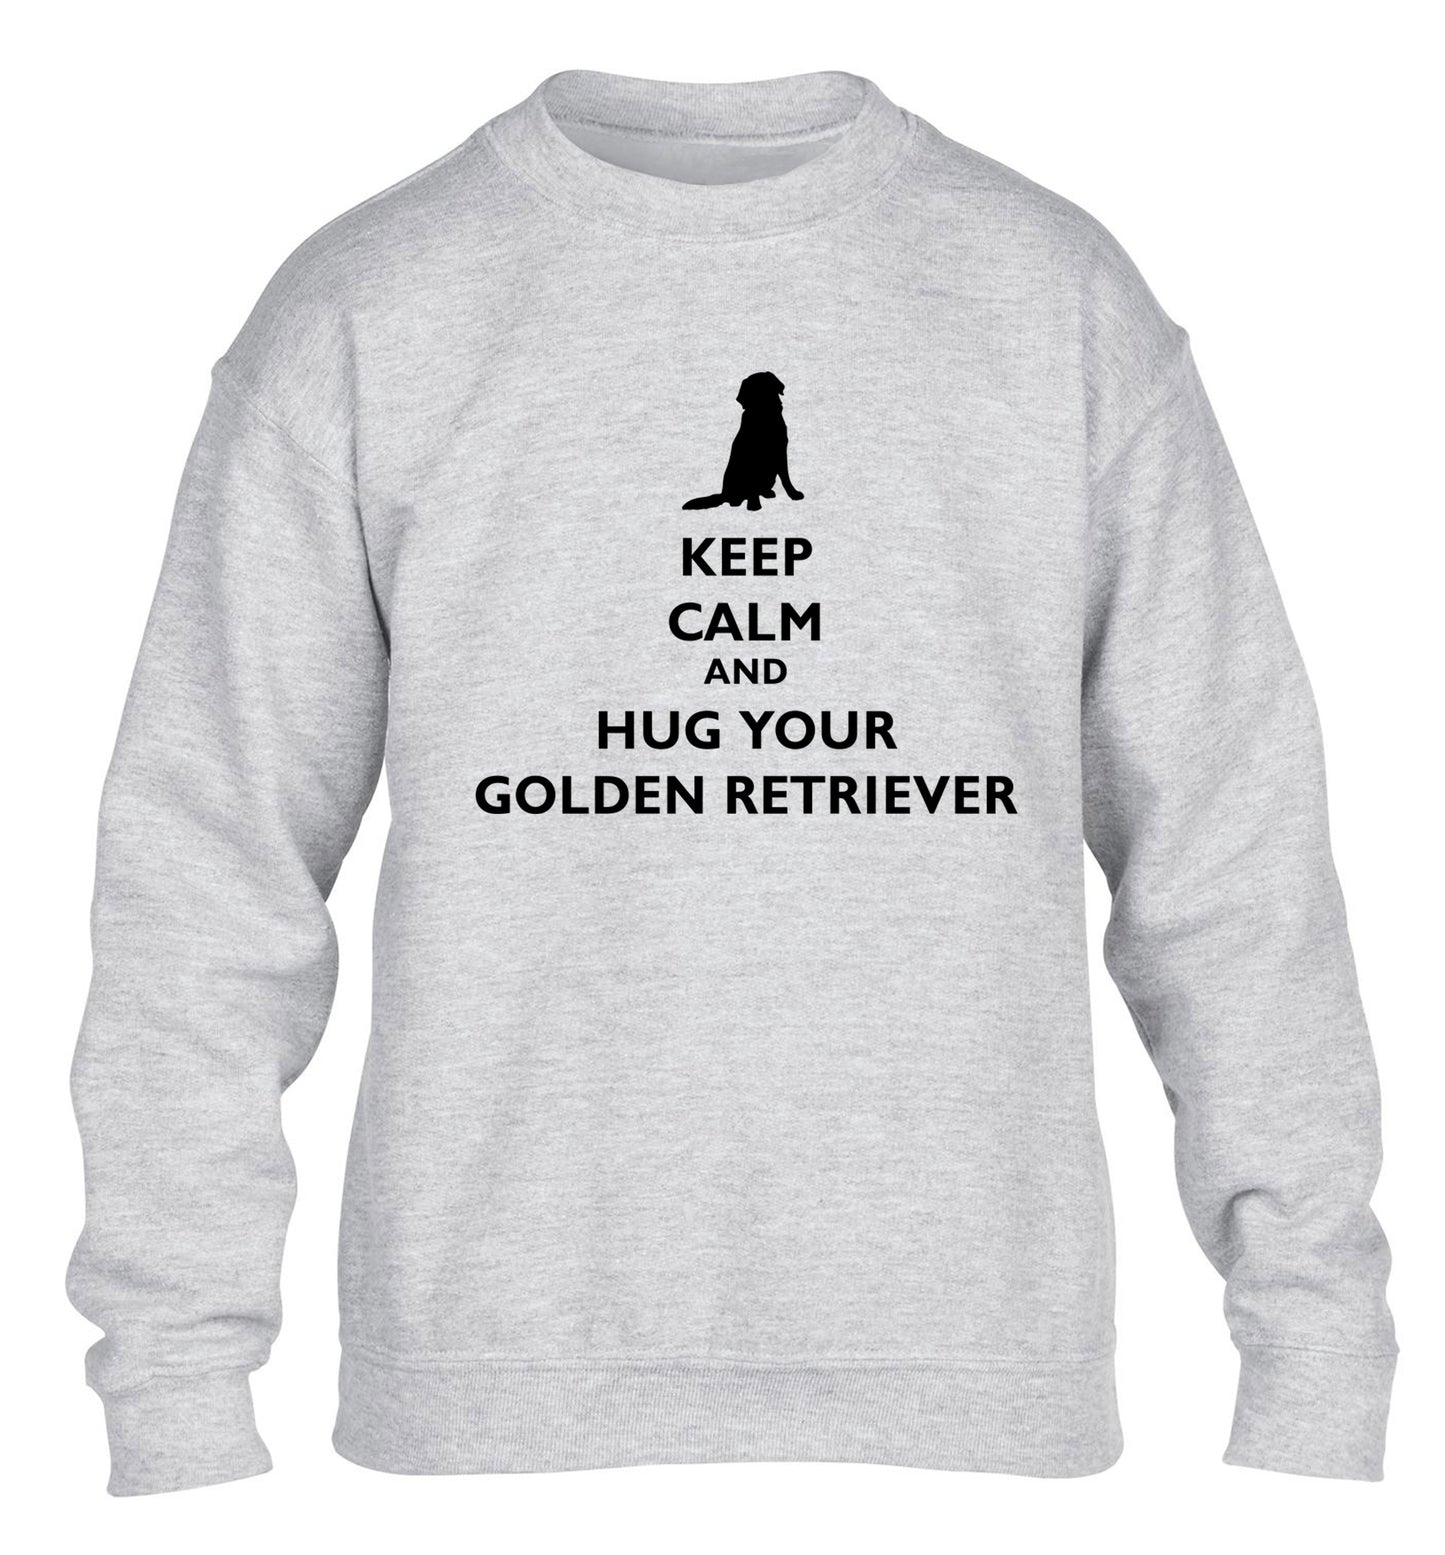 Keep calm and hug your golden retriever children's grey sweater 12-13 Years